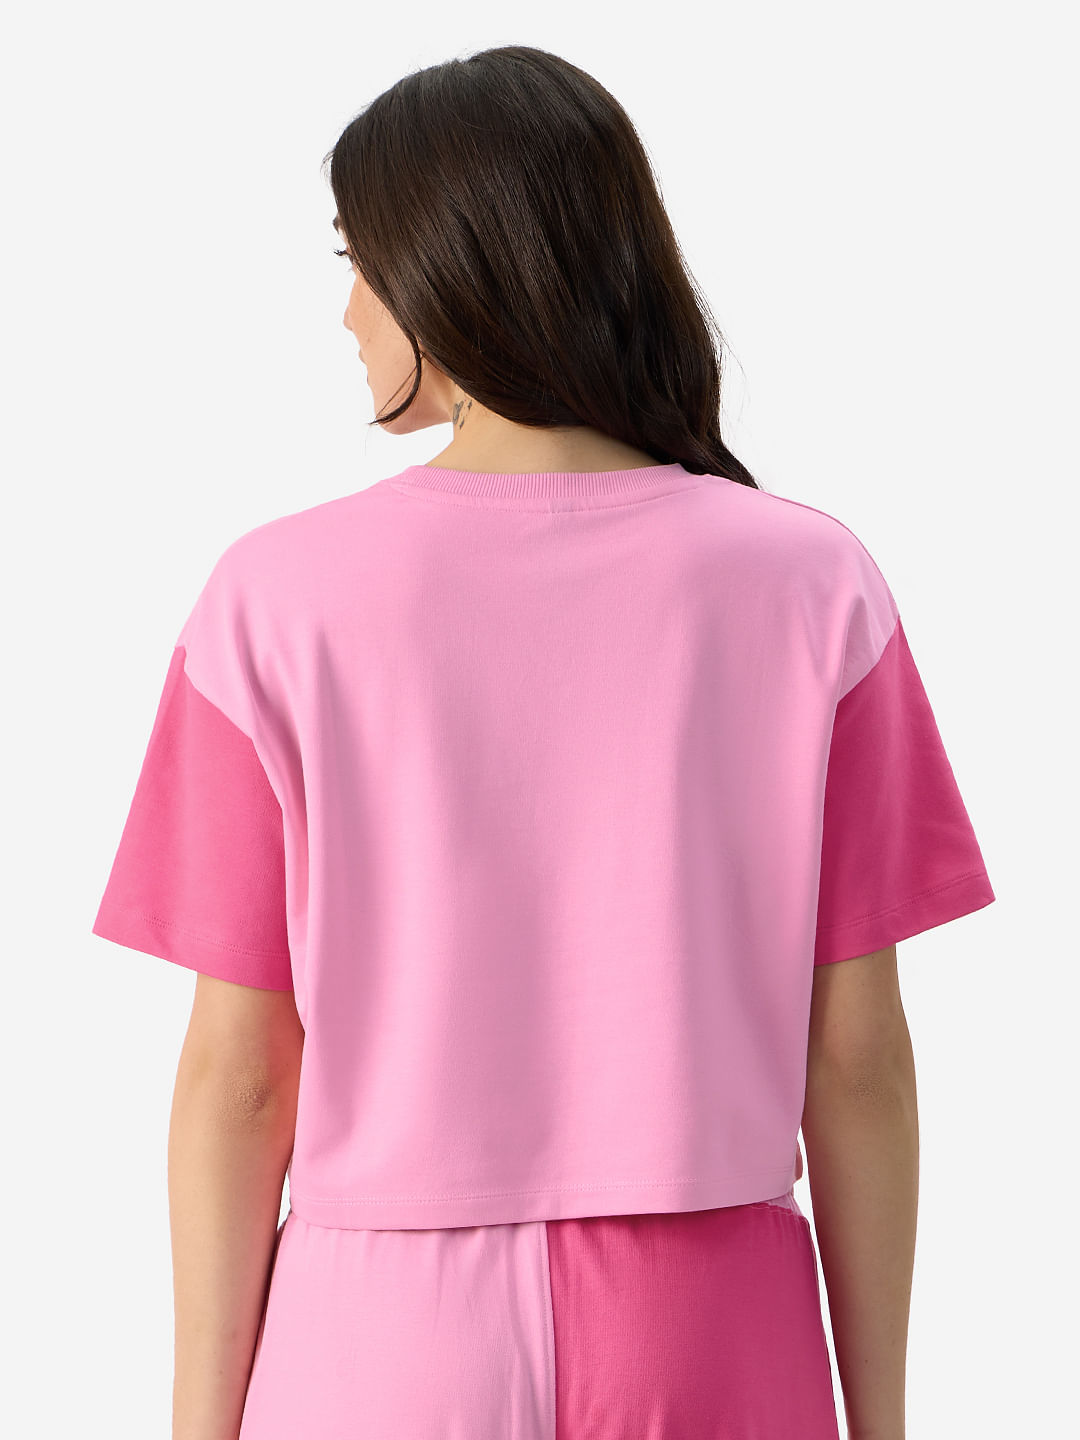 Buy TSS Originals: In A Heart Beat Women Oversized Cropped T-Shirts Online